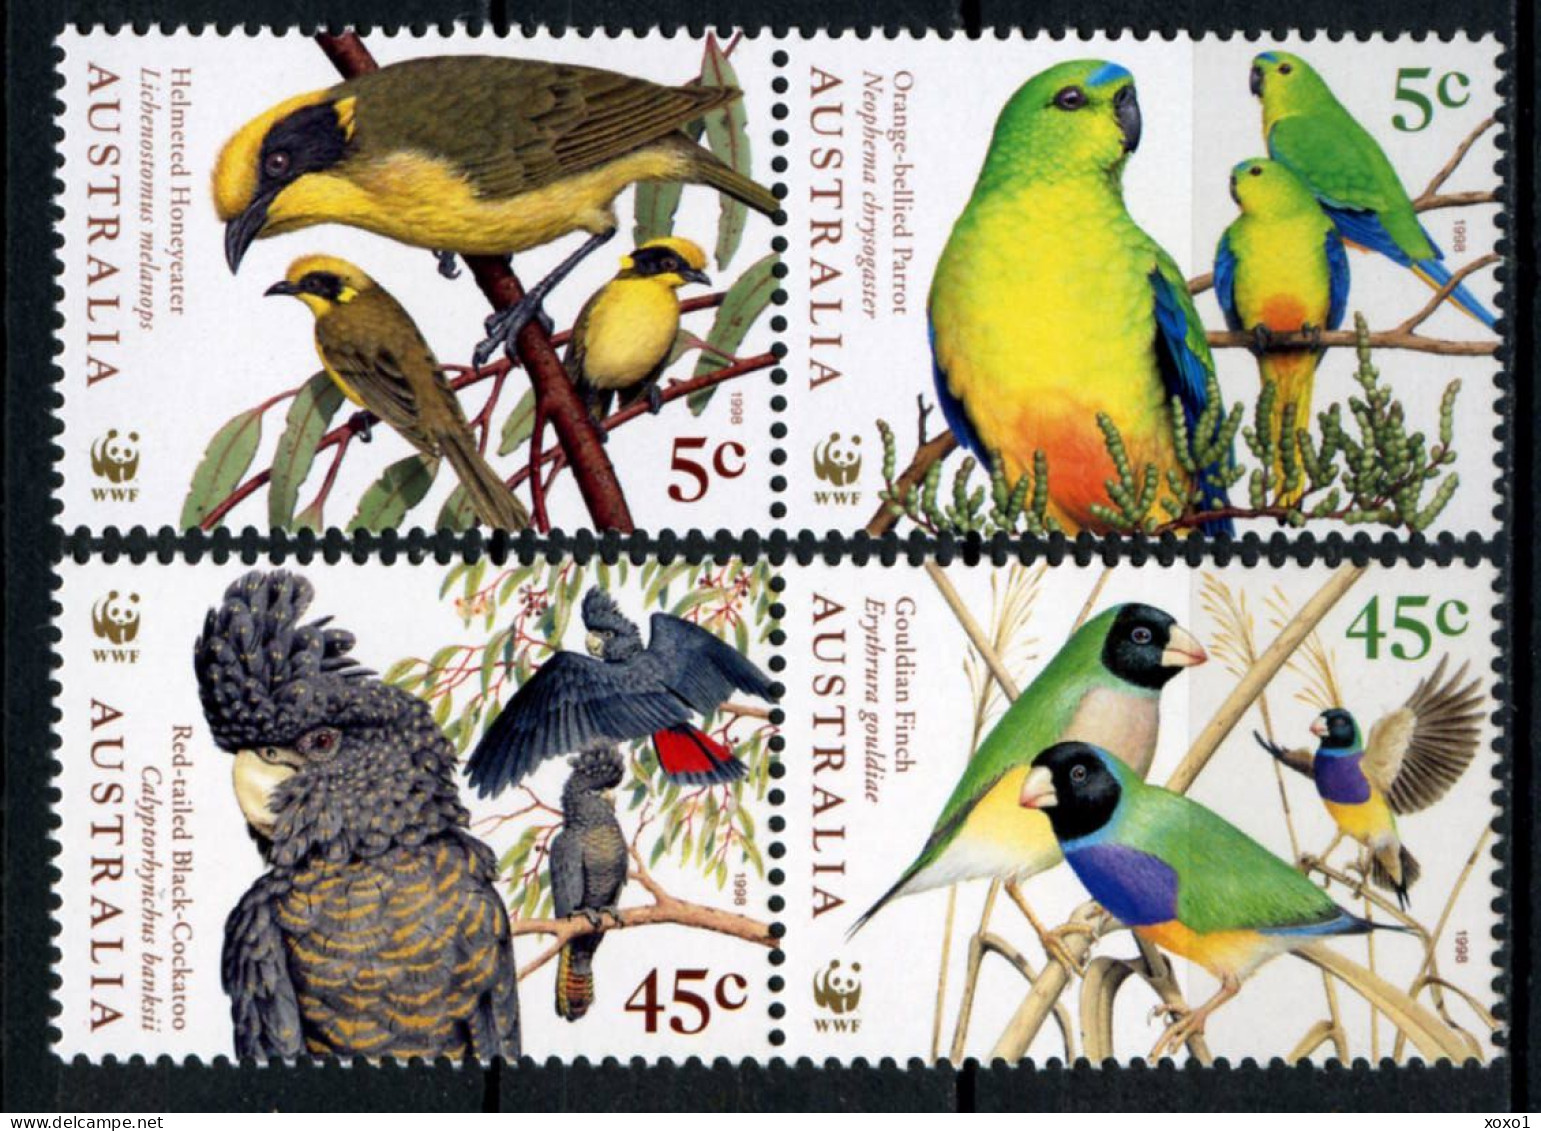 Australia 1998 MiNr. 1744 - 1747  Australien Birds Parrots WWF 4v  MNH**  4.50 € - Papagayos